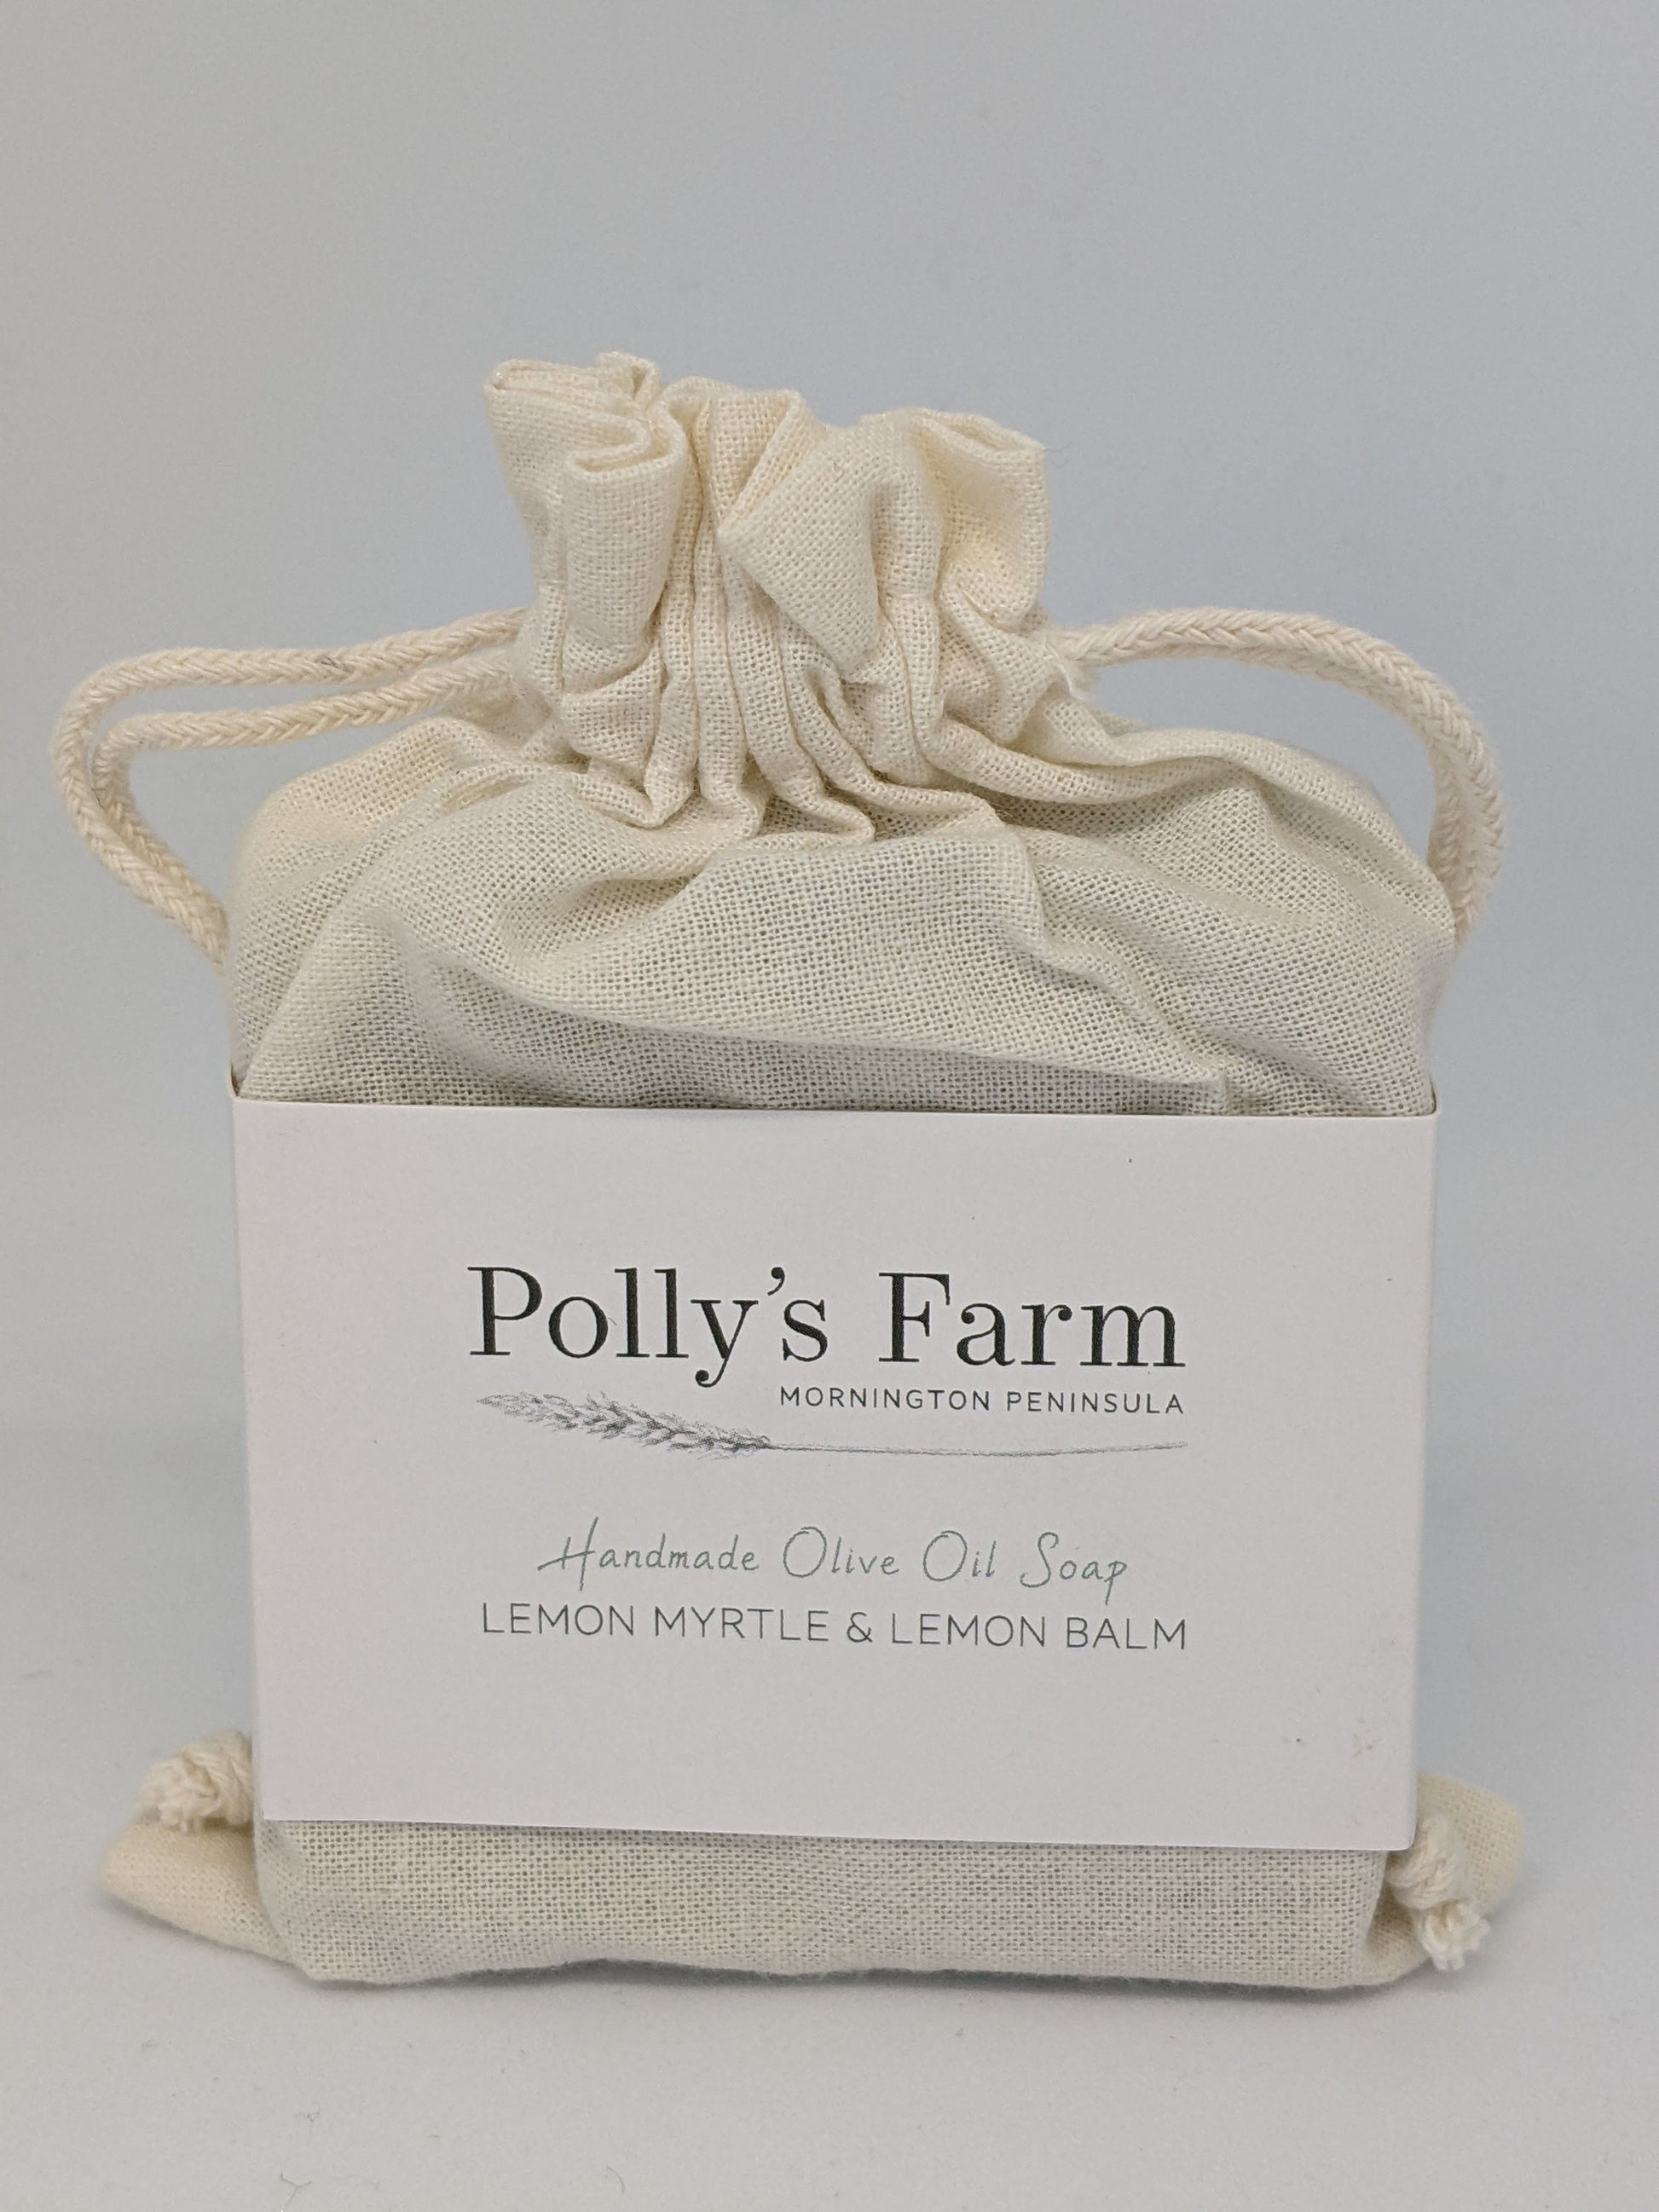 Handmade olive oil lemon myrtle artisan soaps by Polly's Farm Mornington Peninsula